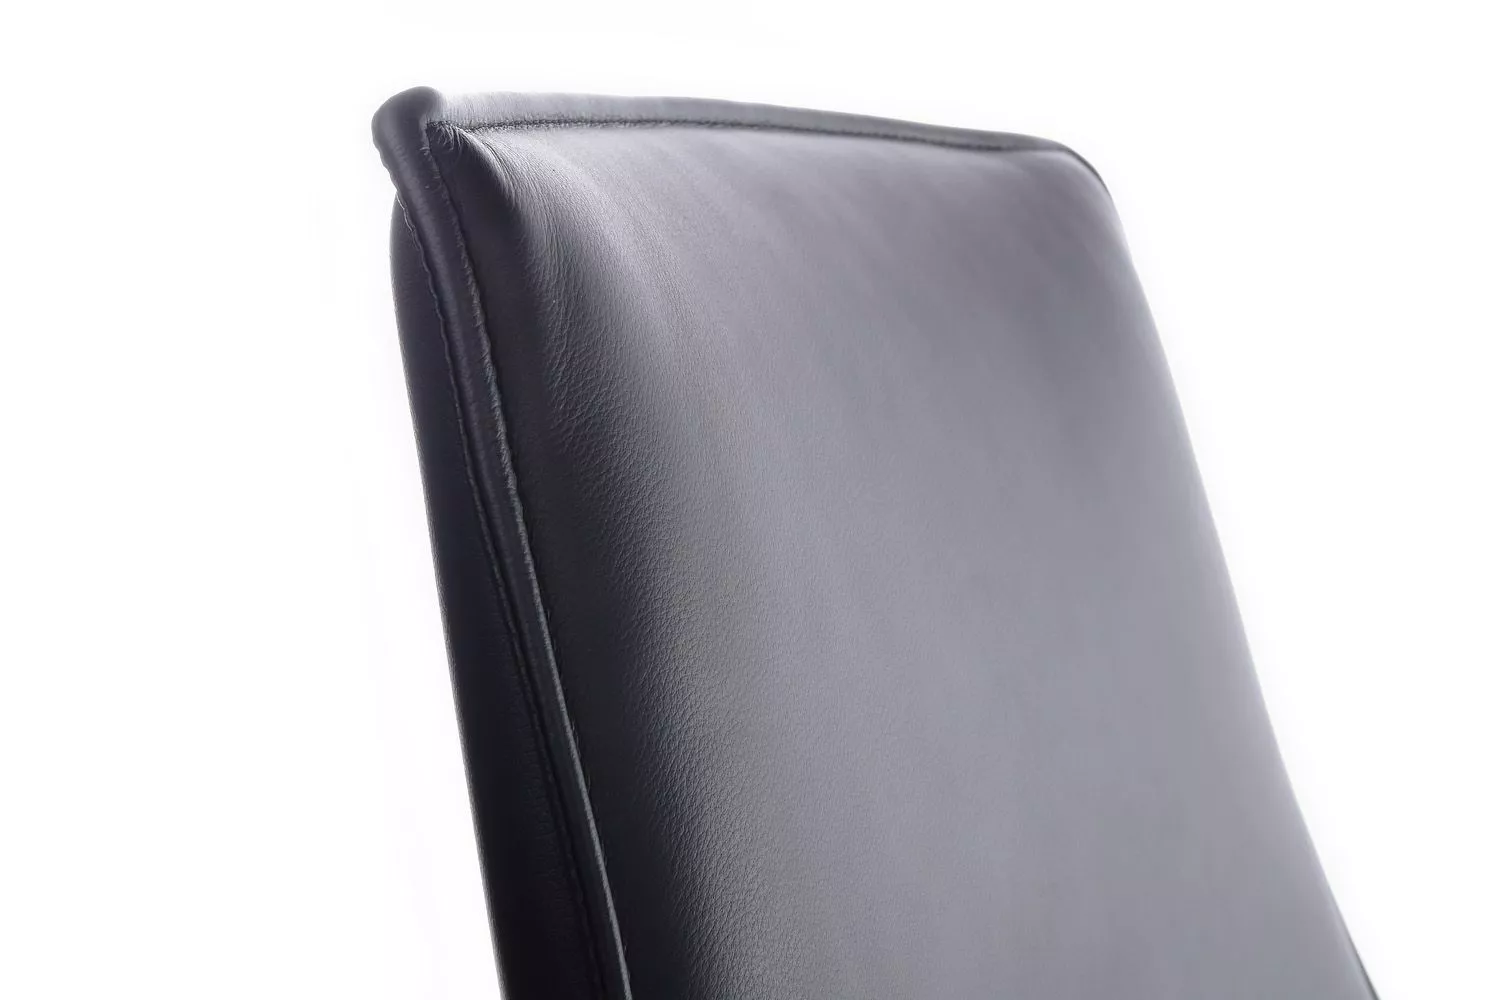 Кресло RIVA DESIGN Rosso-M (B1918) черный